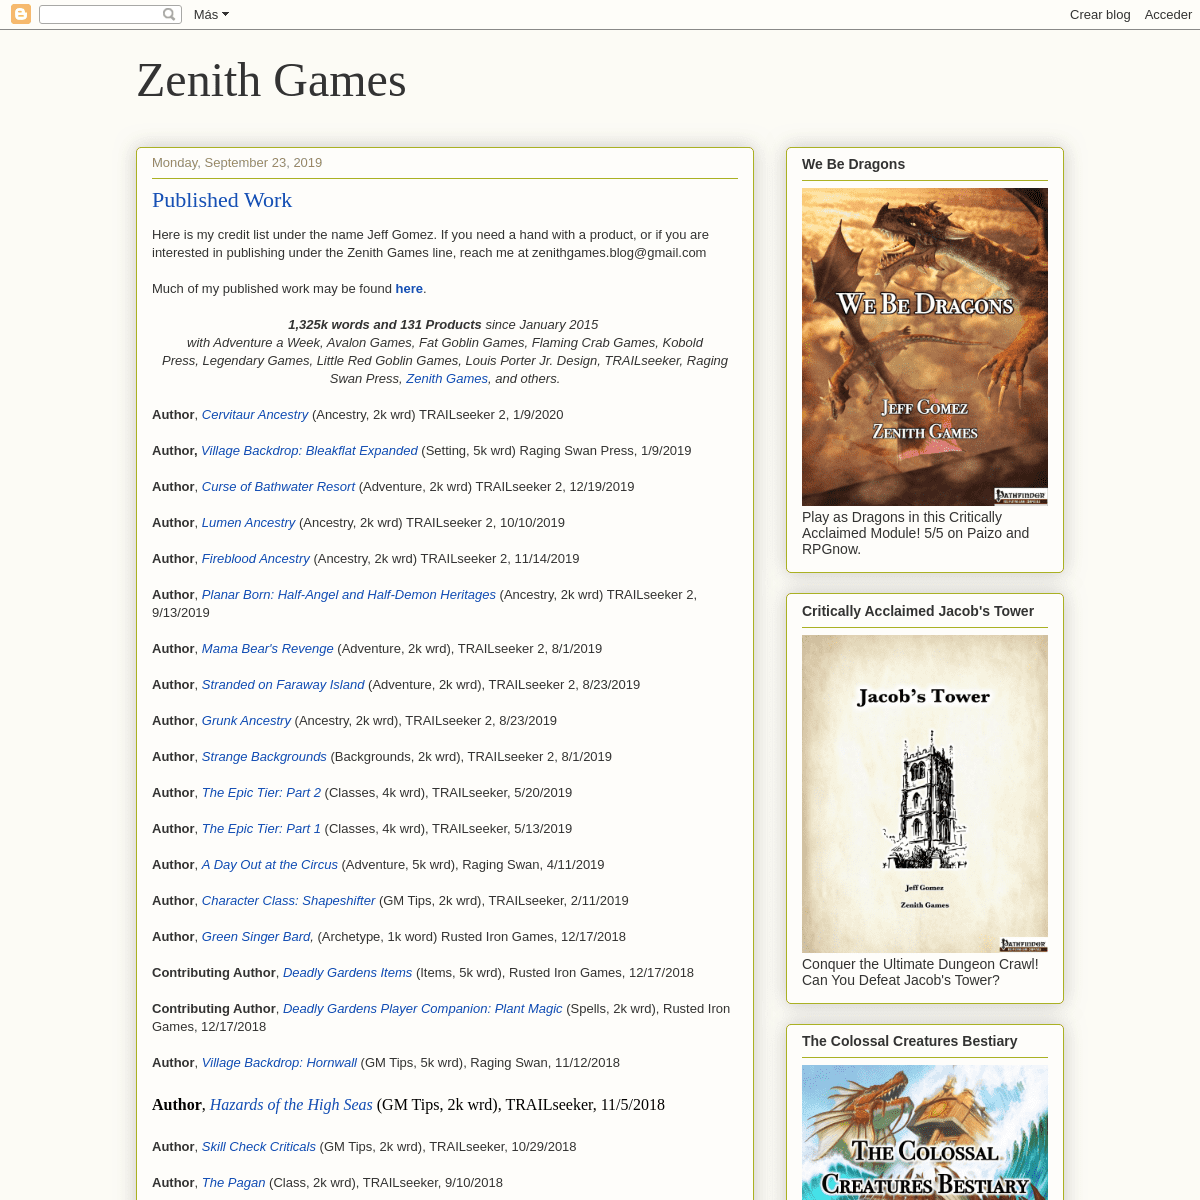 A complete backup of zenithgames.blogspot.com